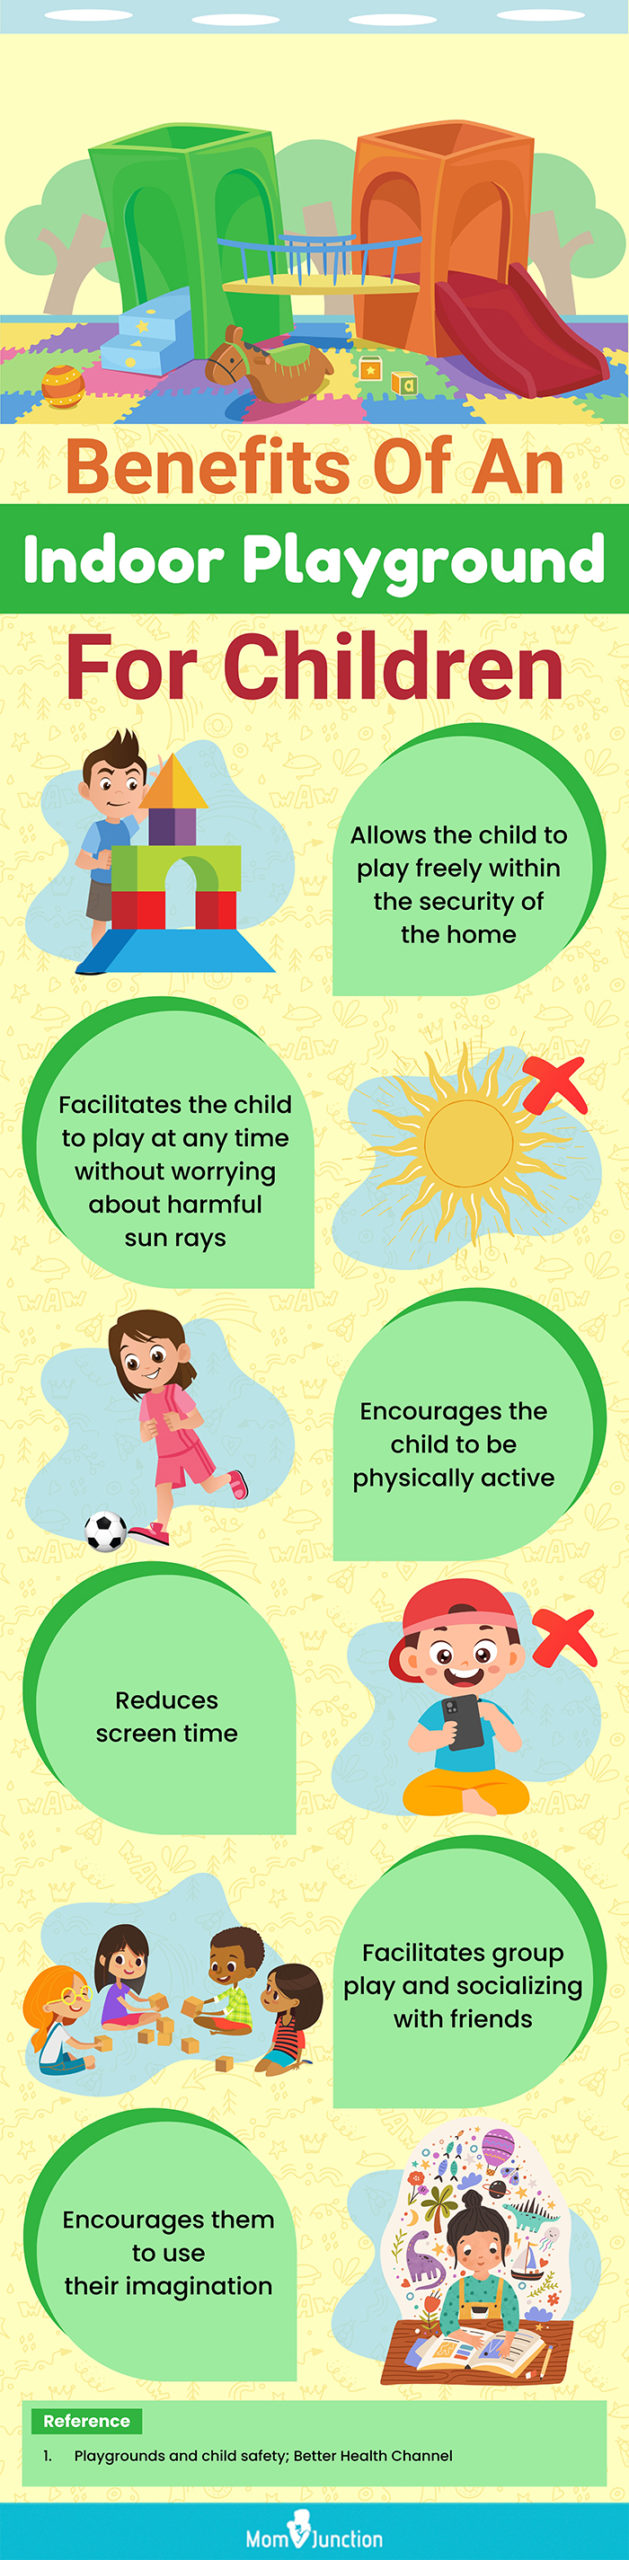 Benefits Of An Indoor Playground For Children